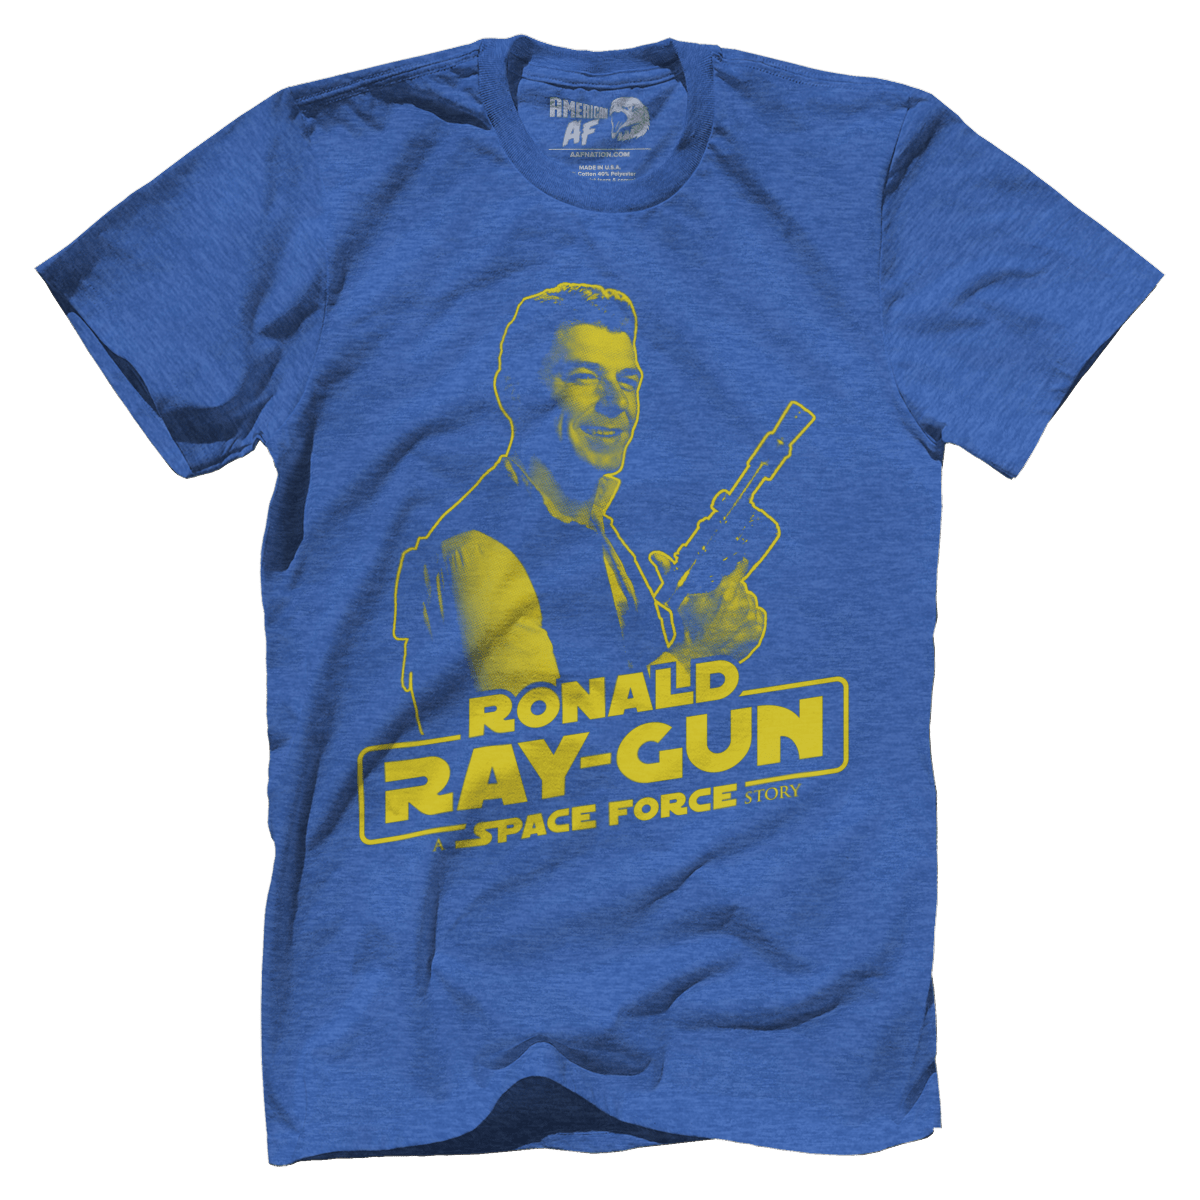 ray gun t shirts